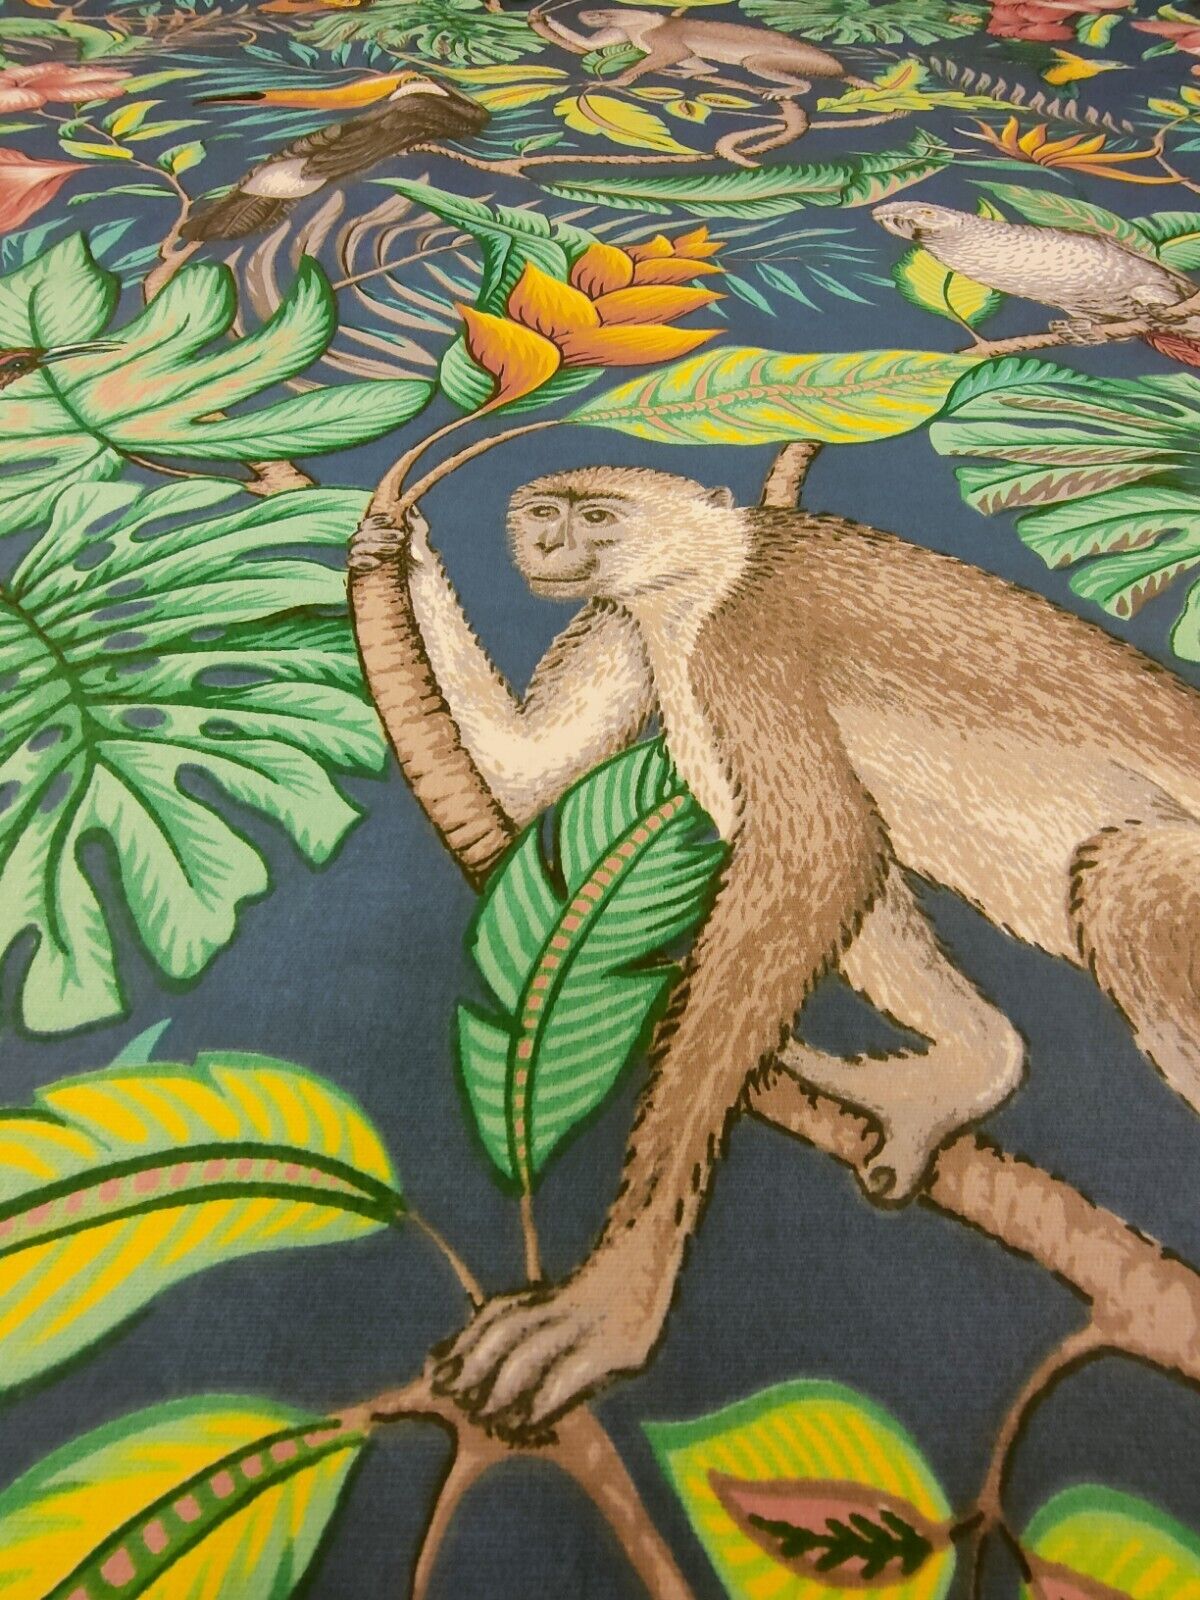 iLiv Rainforest Marine Curtain Upholstery Fabric 2 Metres